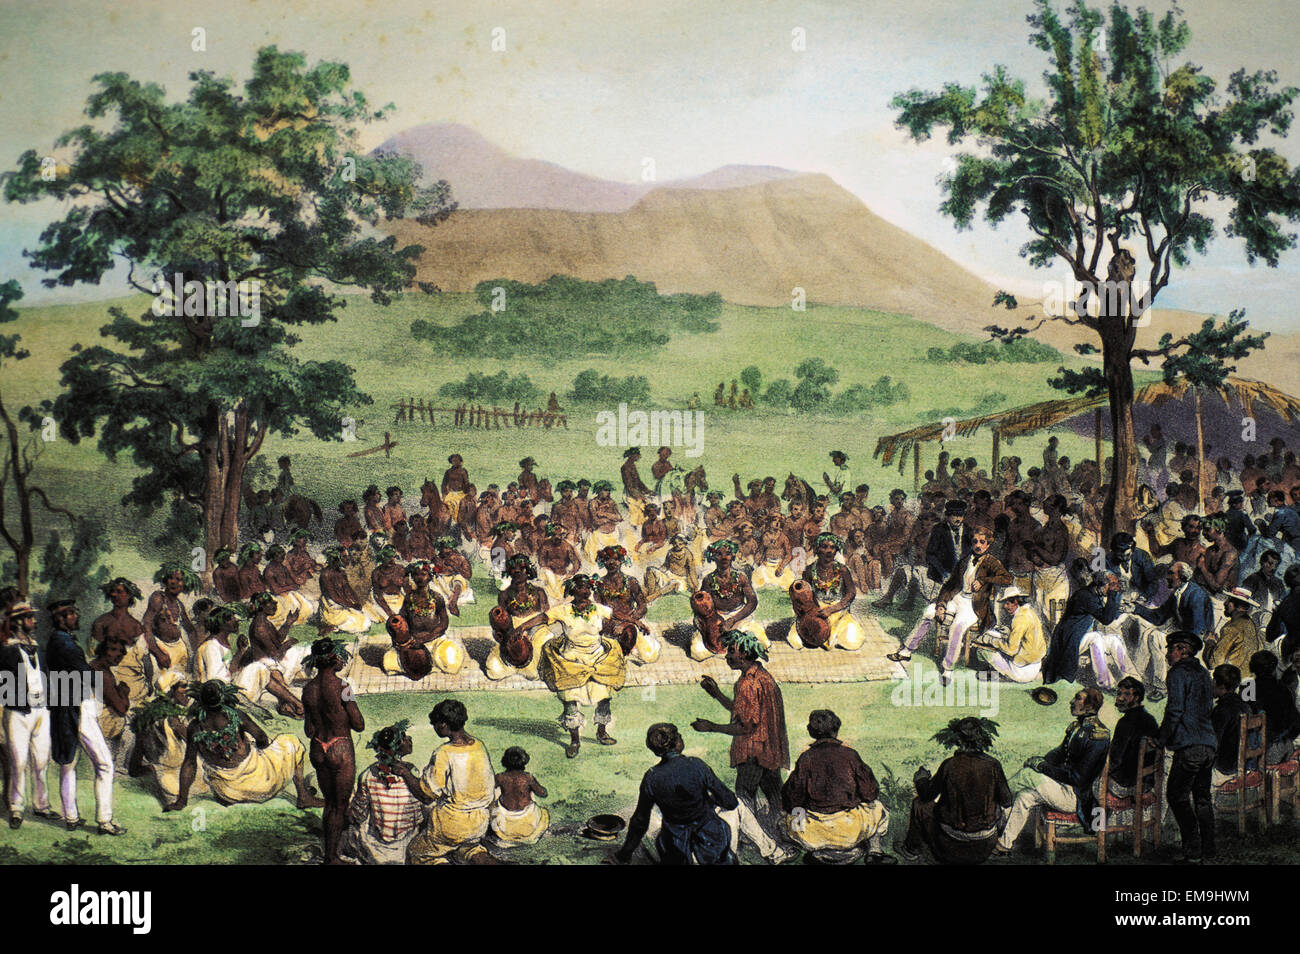 C.1840 Art/Book Illustration, Natives Of The Sandwich Islands Gather Around Dancers Stock Photo